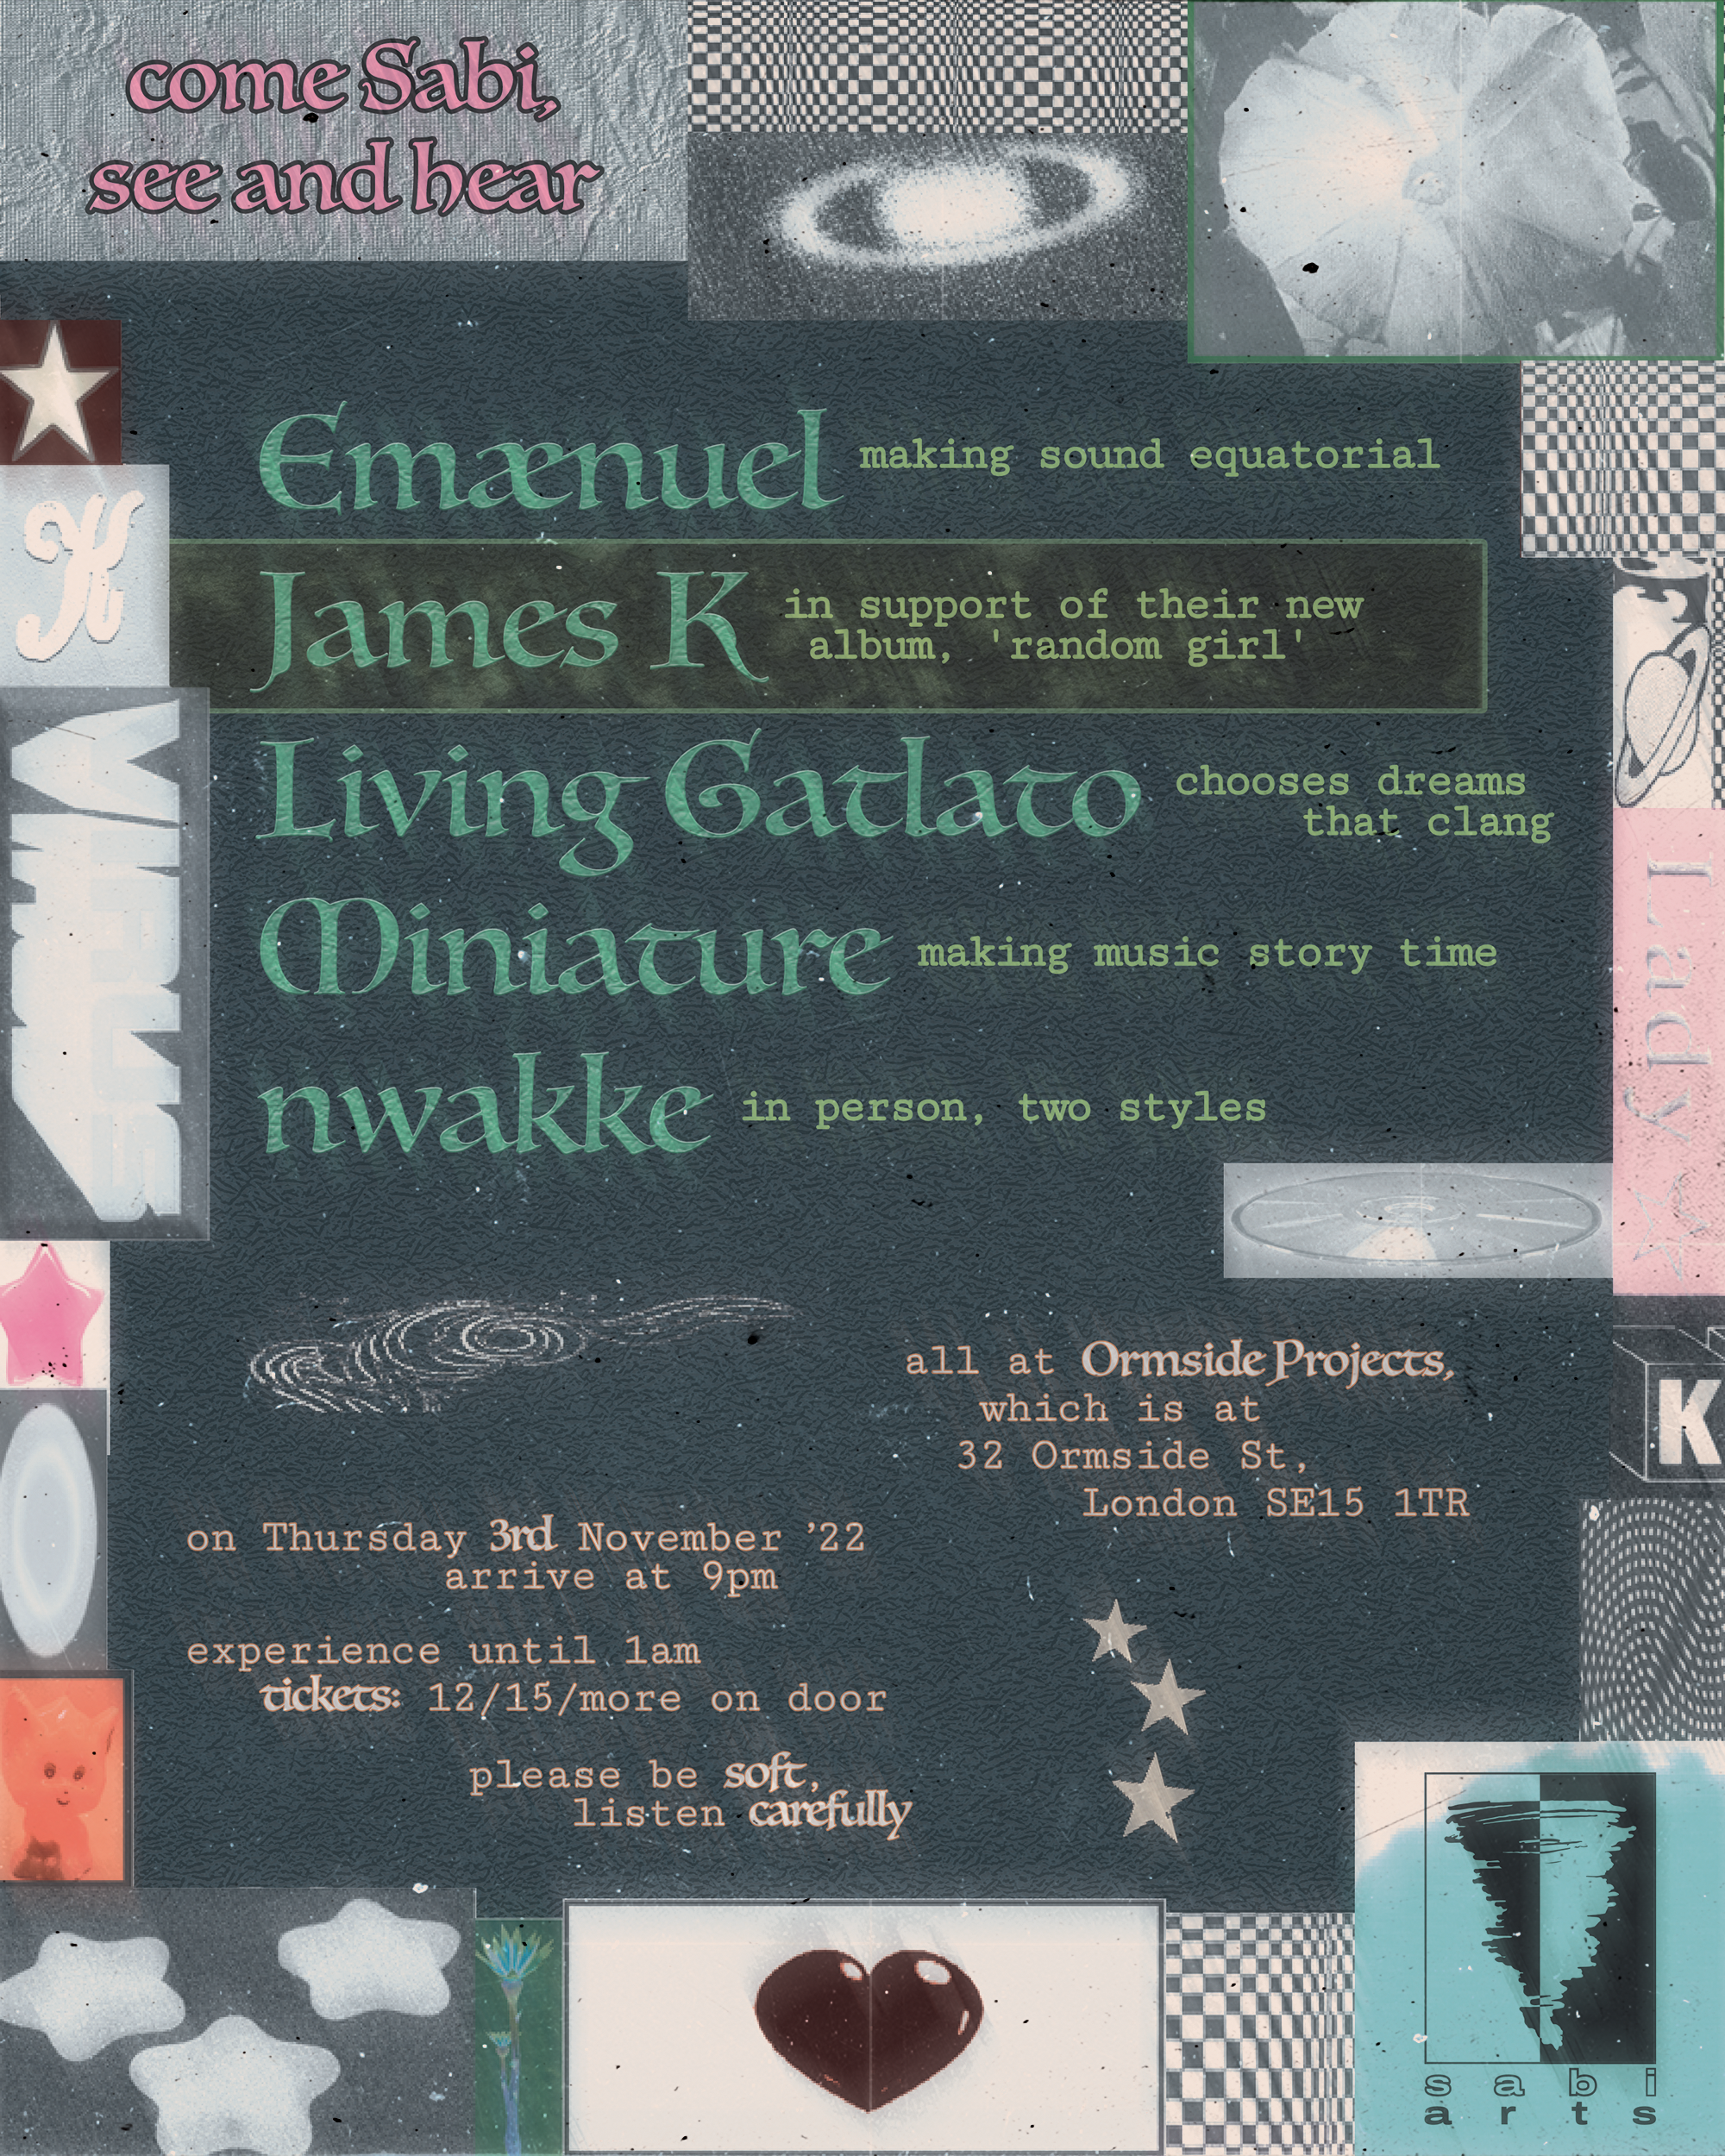 Sabi Arts with James K, Emaenuel, Living Gatlato, Miniature, and nwakke - フライヤー表